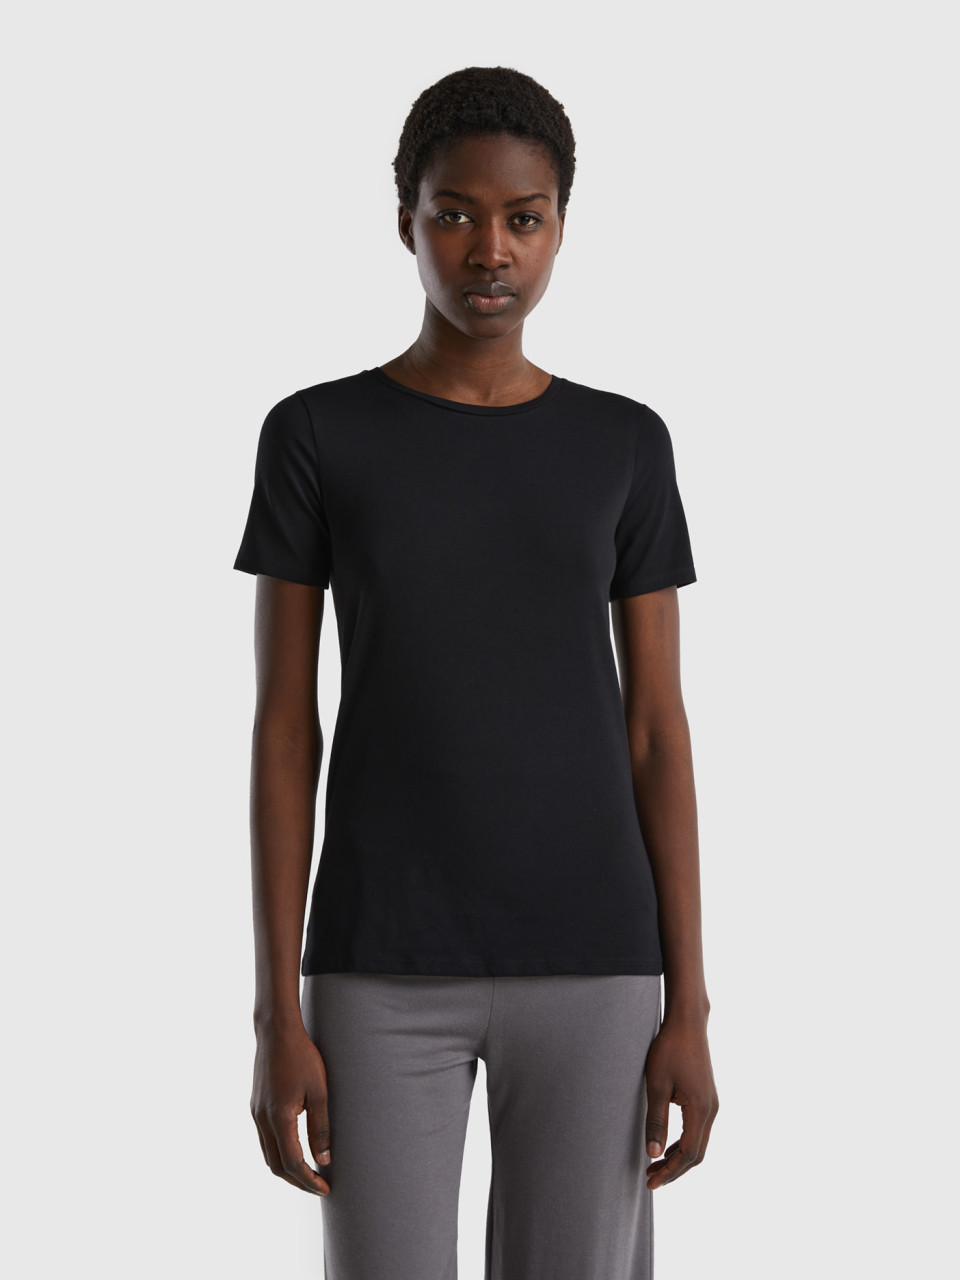 Benetton, Super Stretch Organic Cotton T-shirt, Black, Women